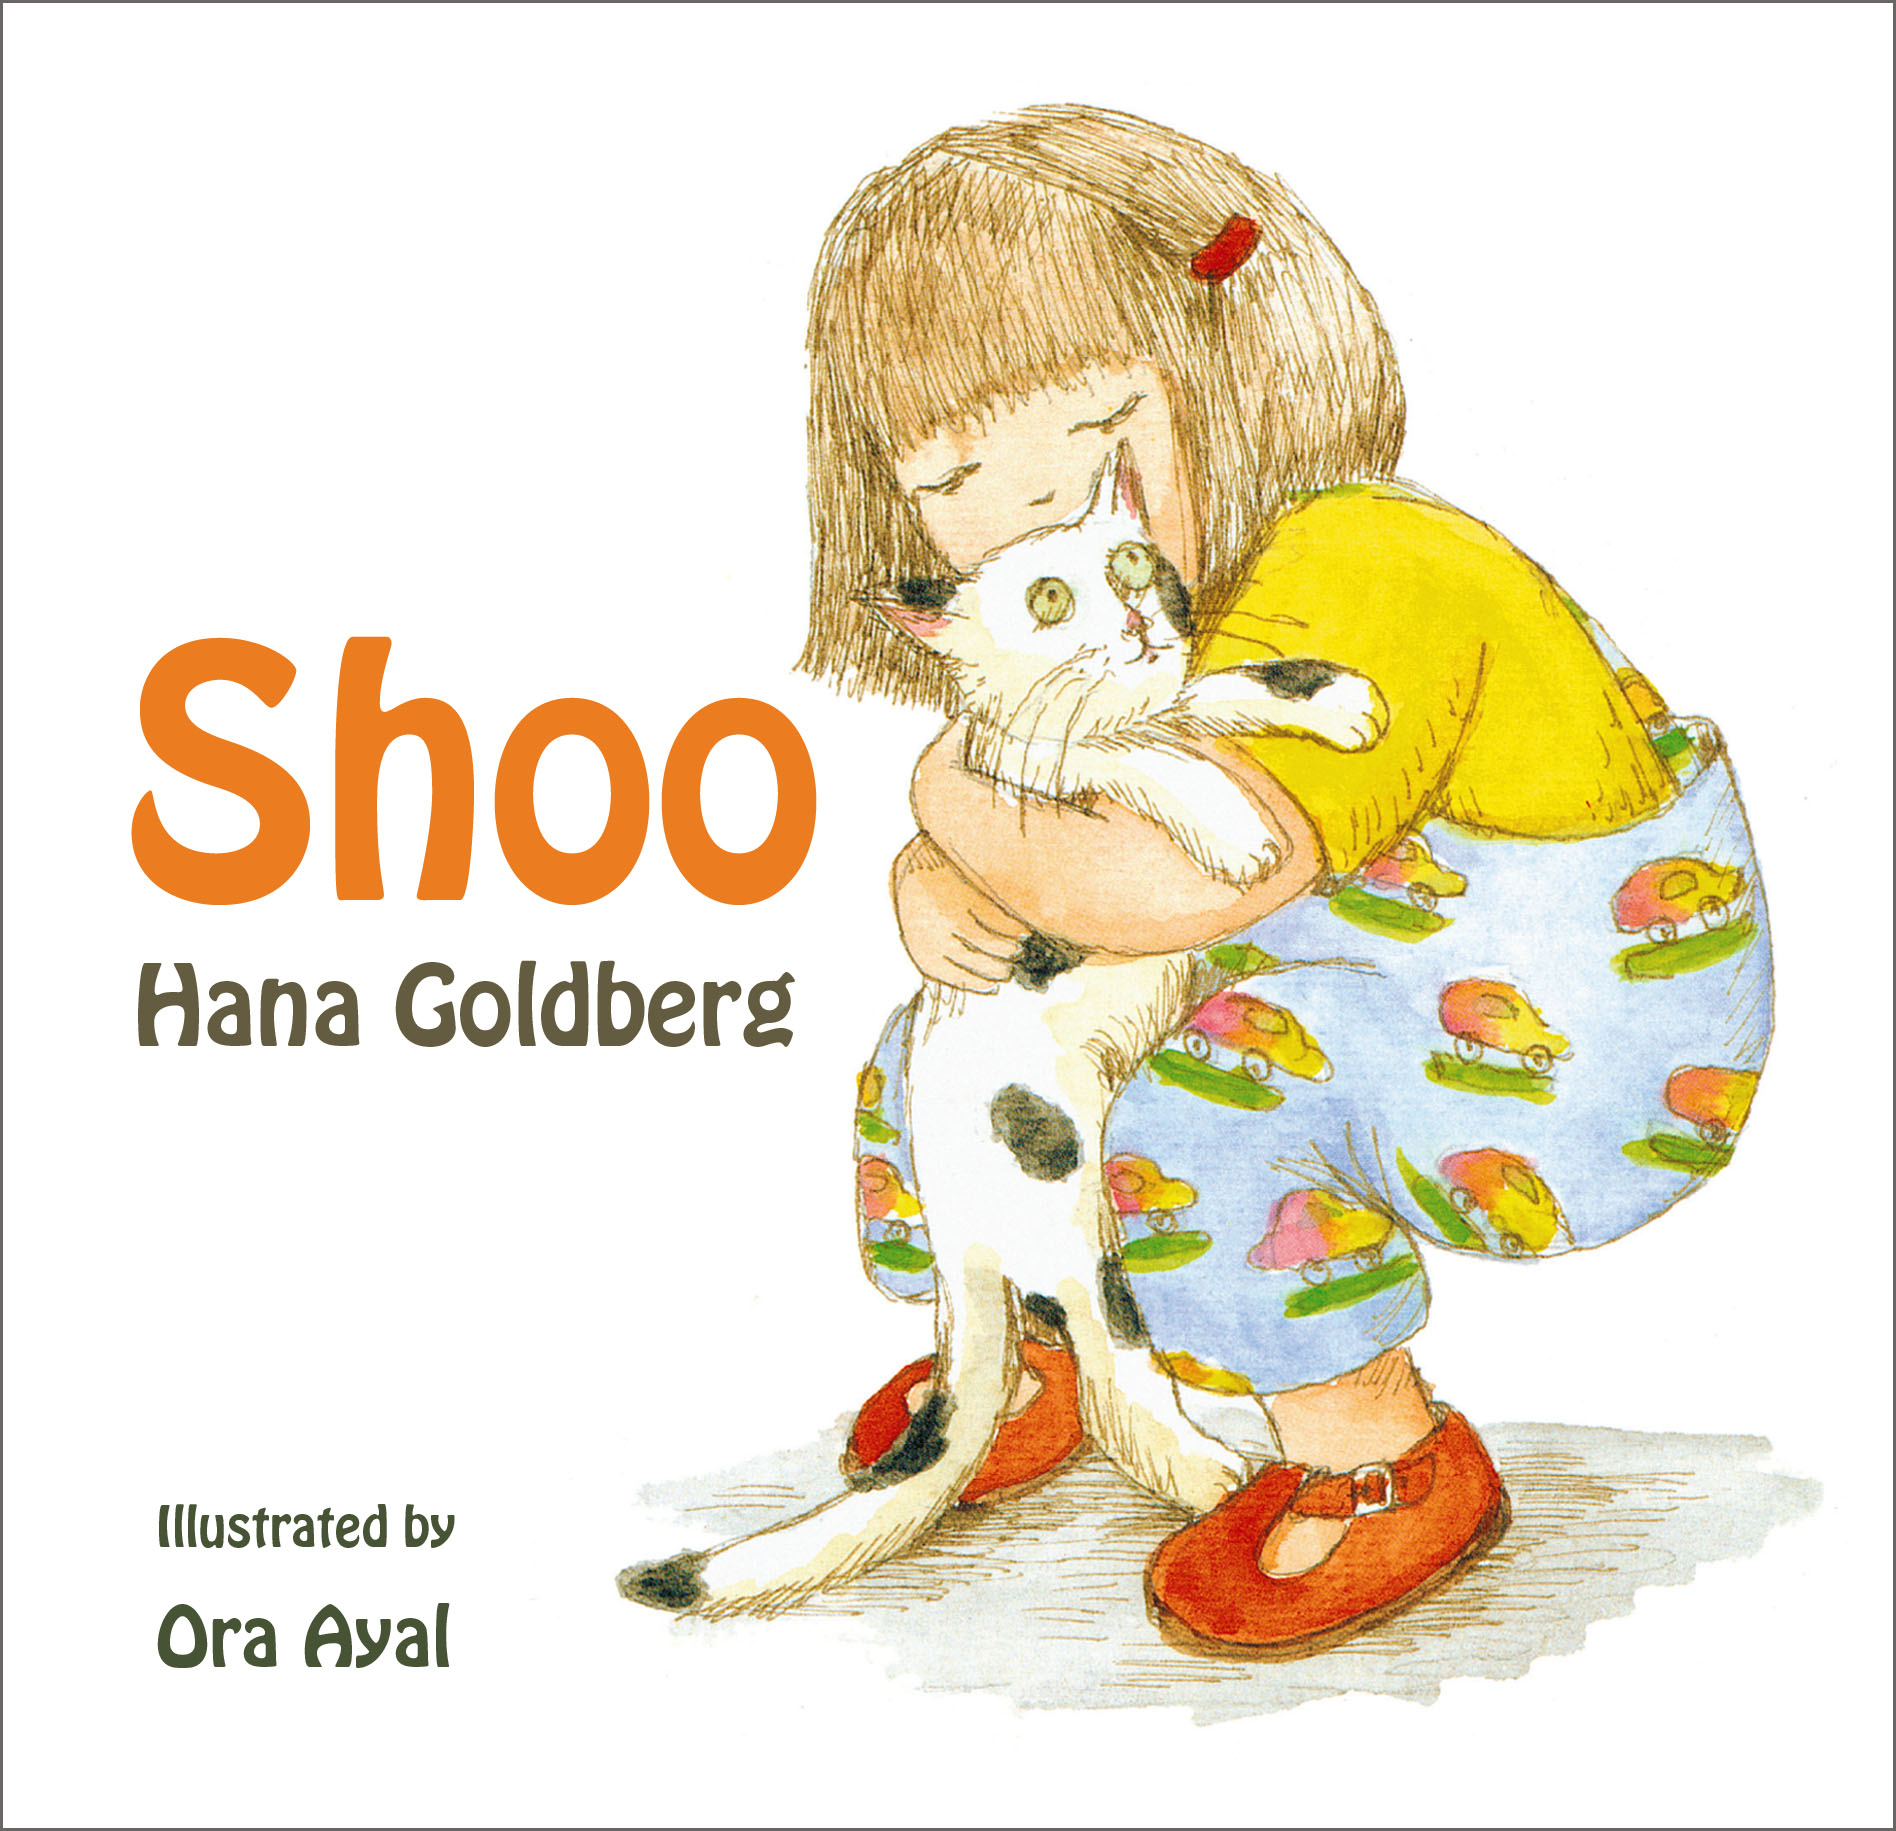 FREE: Children’s Book (Ages 1-8): Shoo by Hana Goldberg